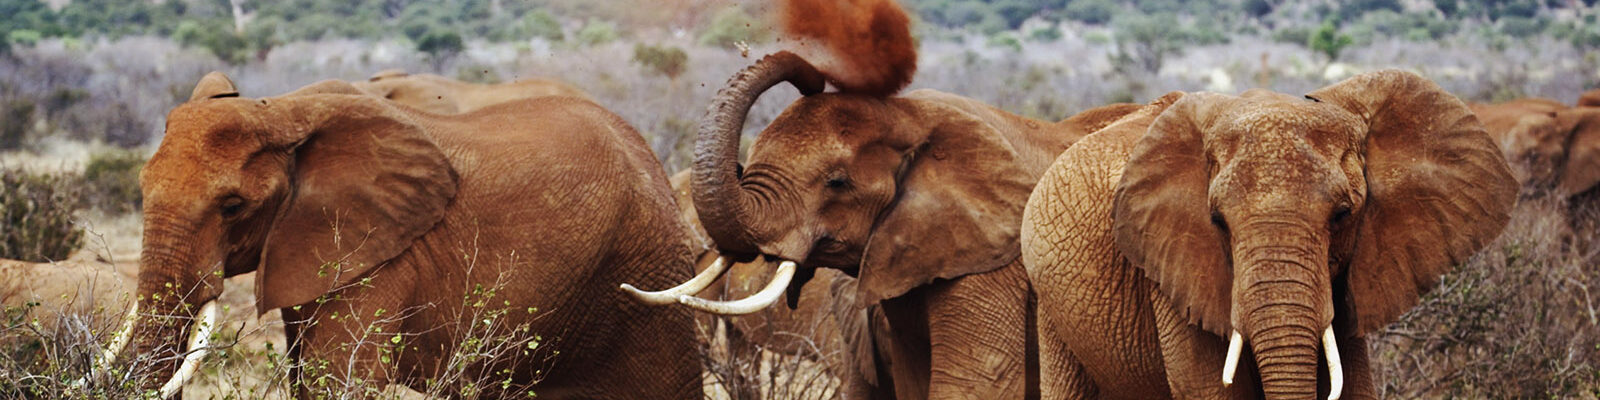 African Elephants in Tsavo West National Park